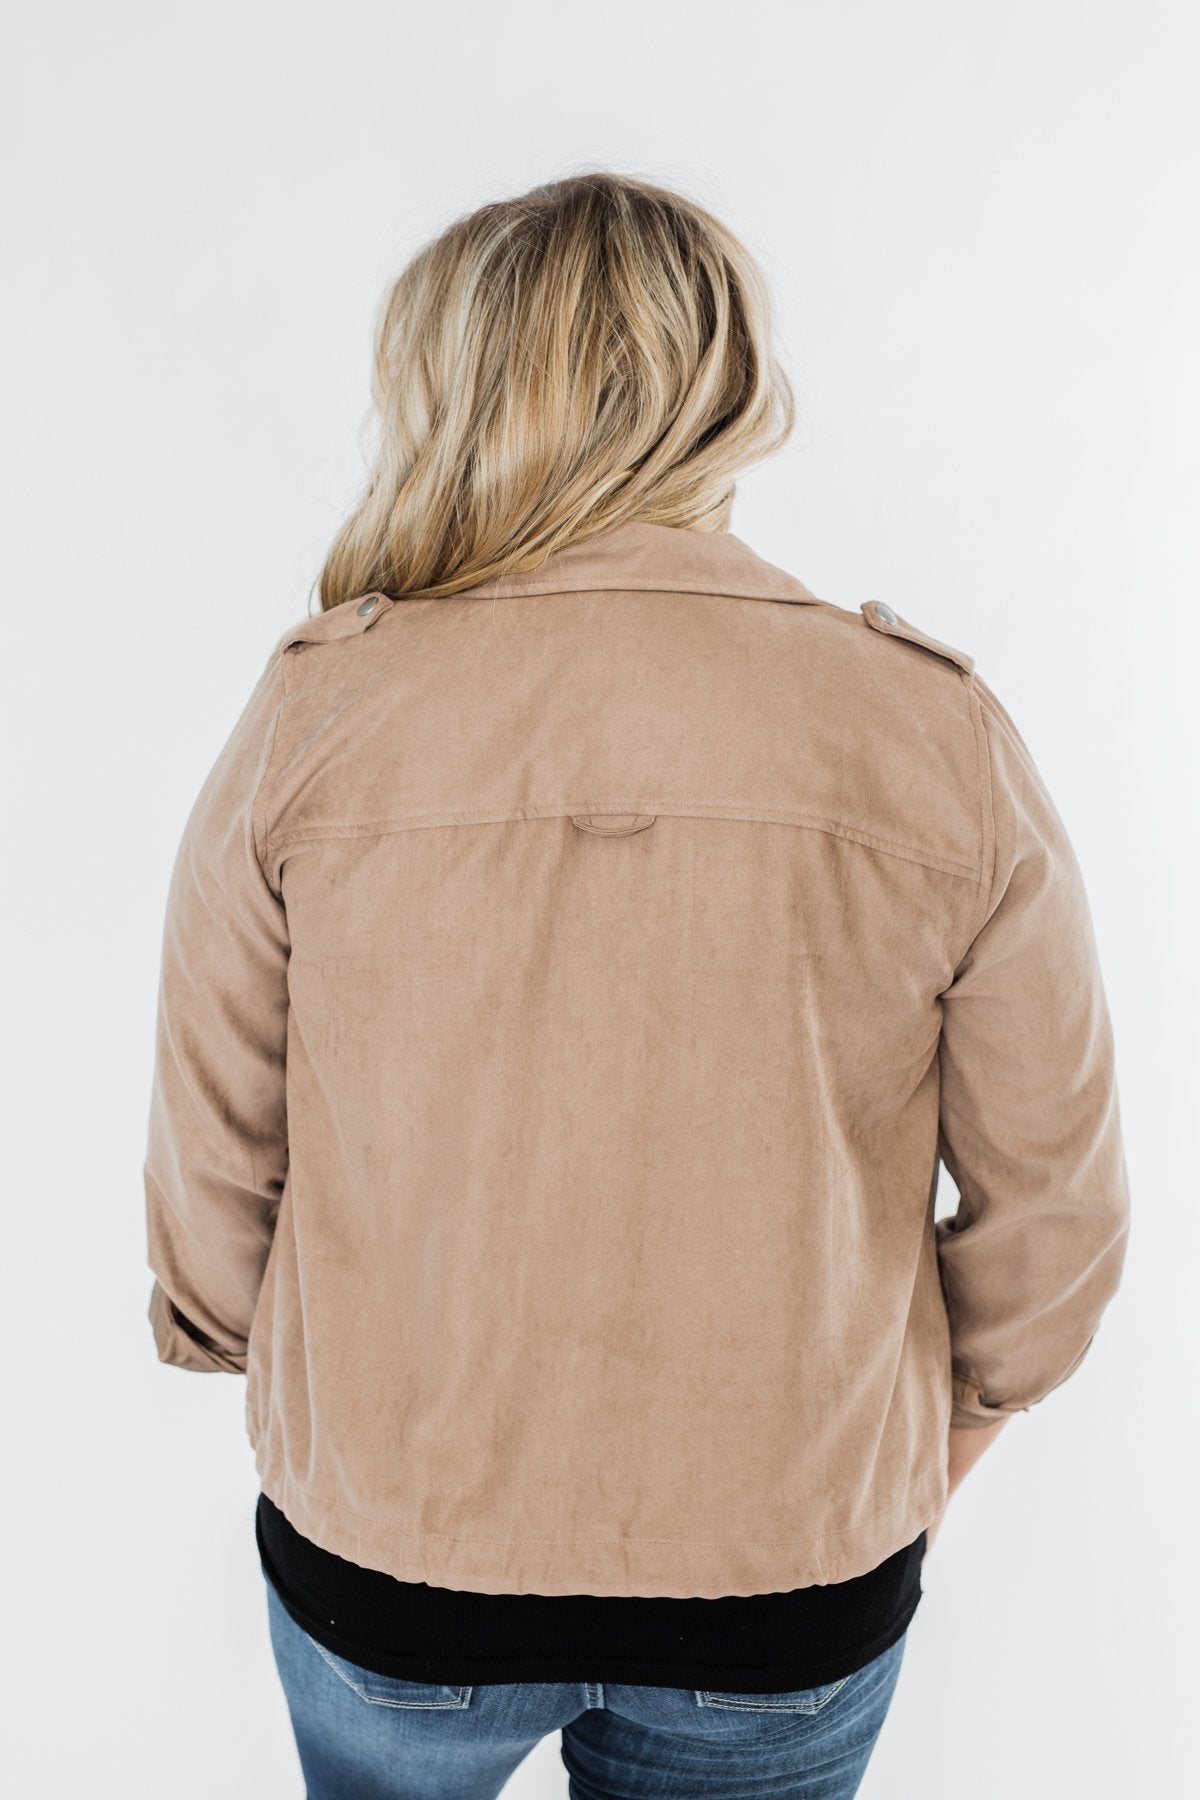 Brisk Morning Lightweight Zip Up Jacket- Mocha – The Pulse Boutique